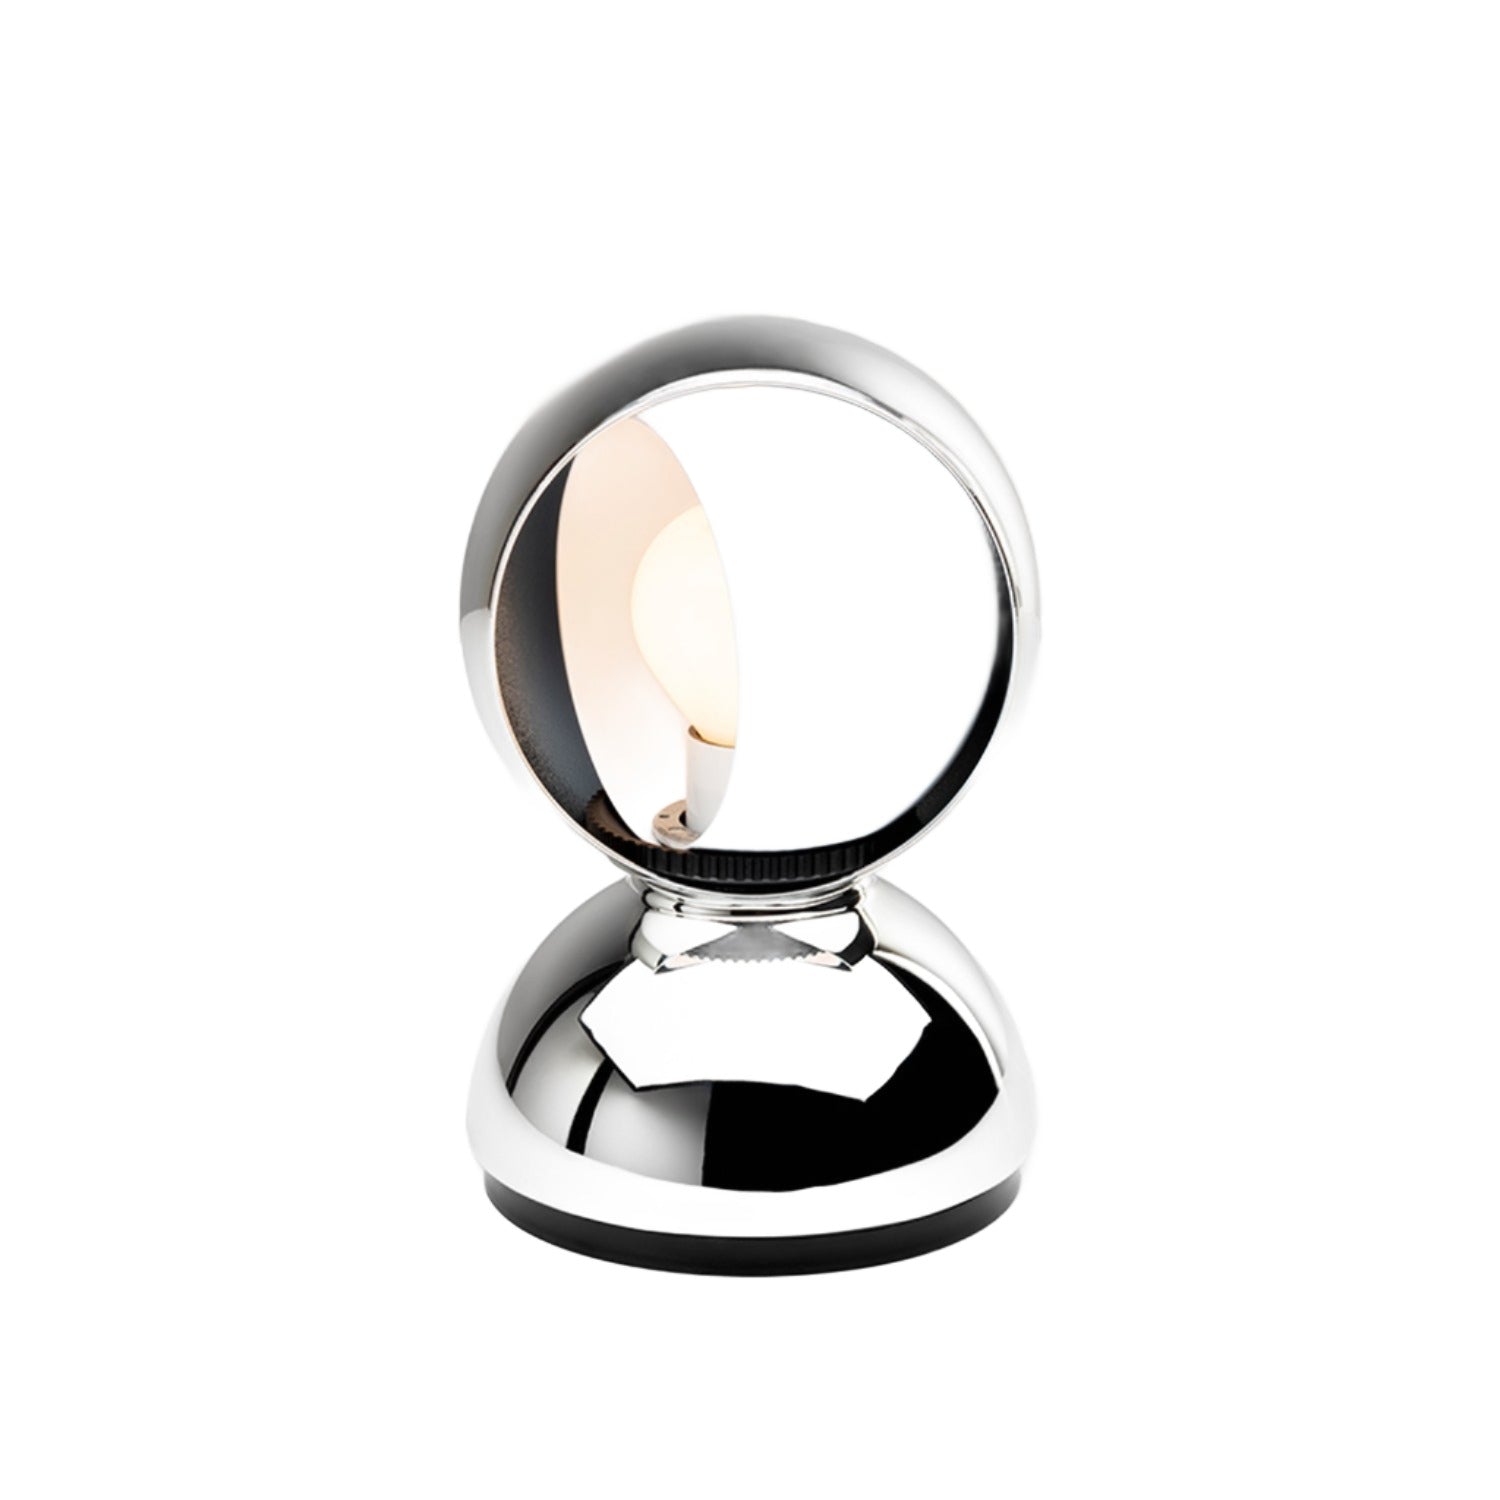 Artemide Eclisse Table Lamp Mirror